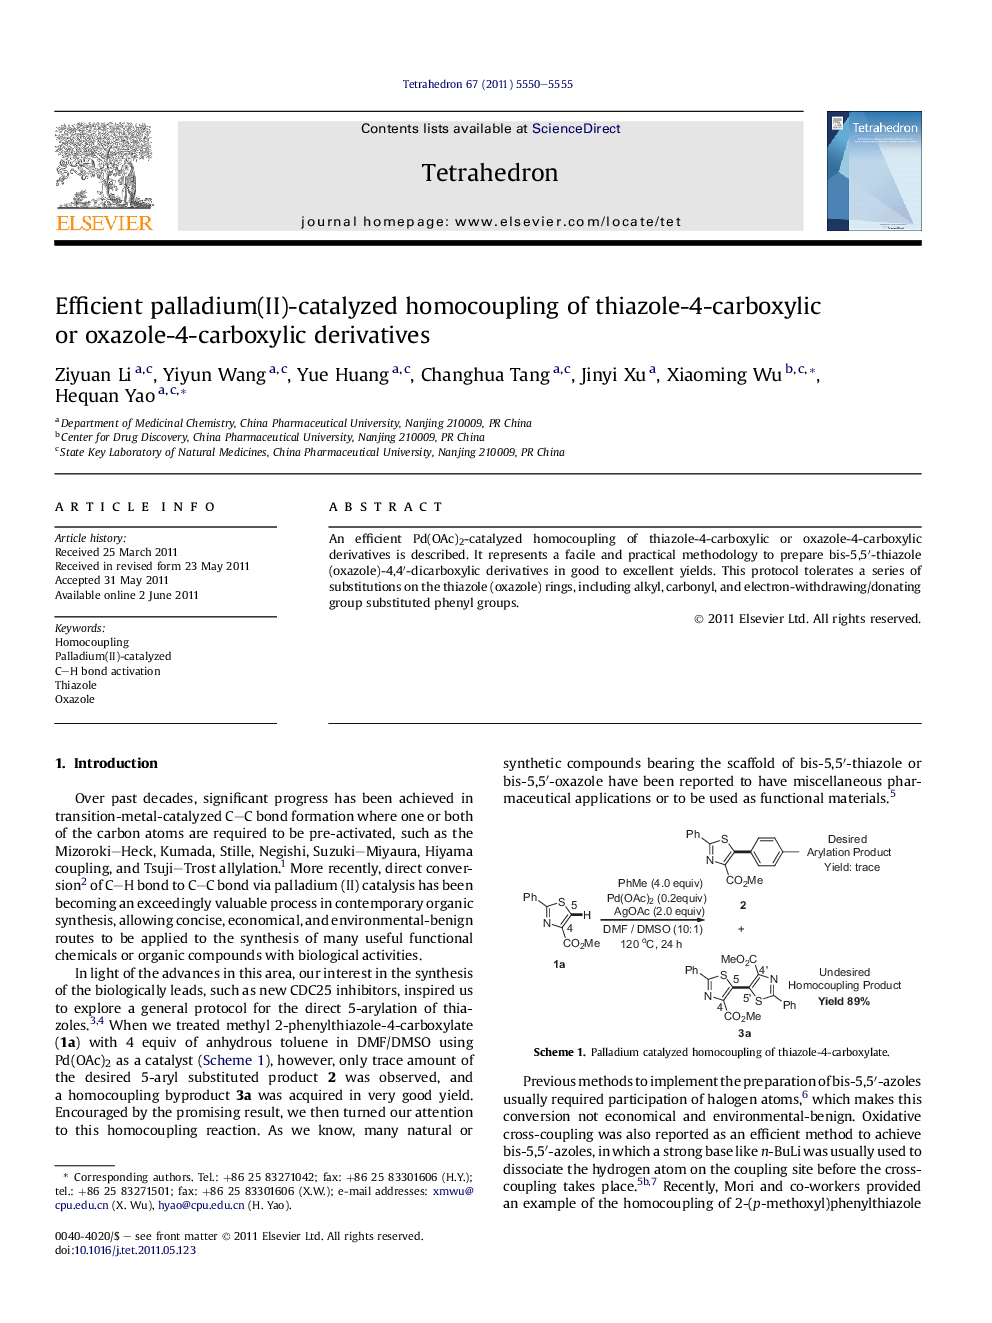 Efficient palladium(II)-catalyzed homocoupling of thiazole-4-carboxylic or oxazole-4-carboxylic derivatives